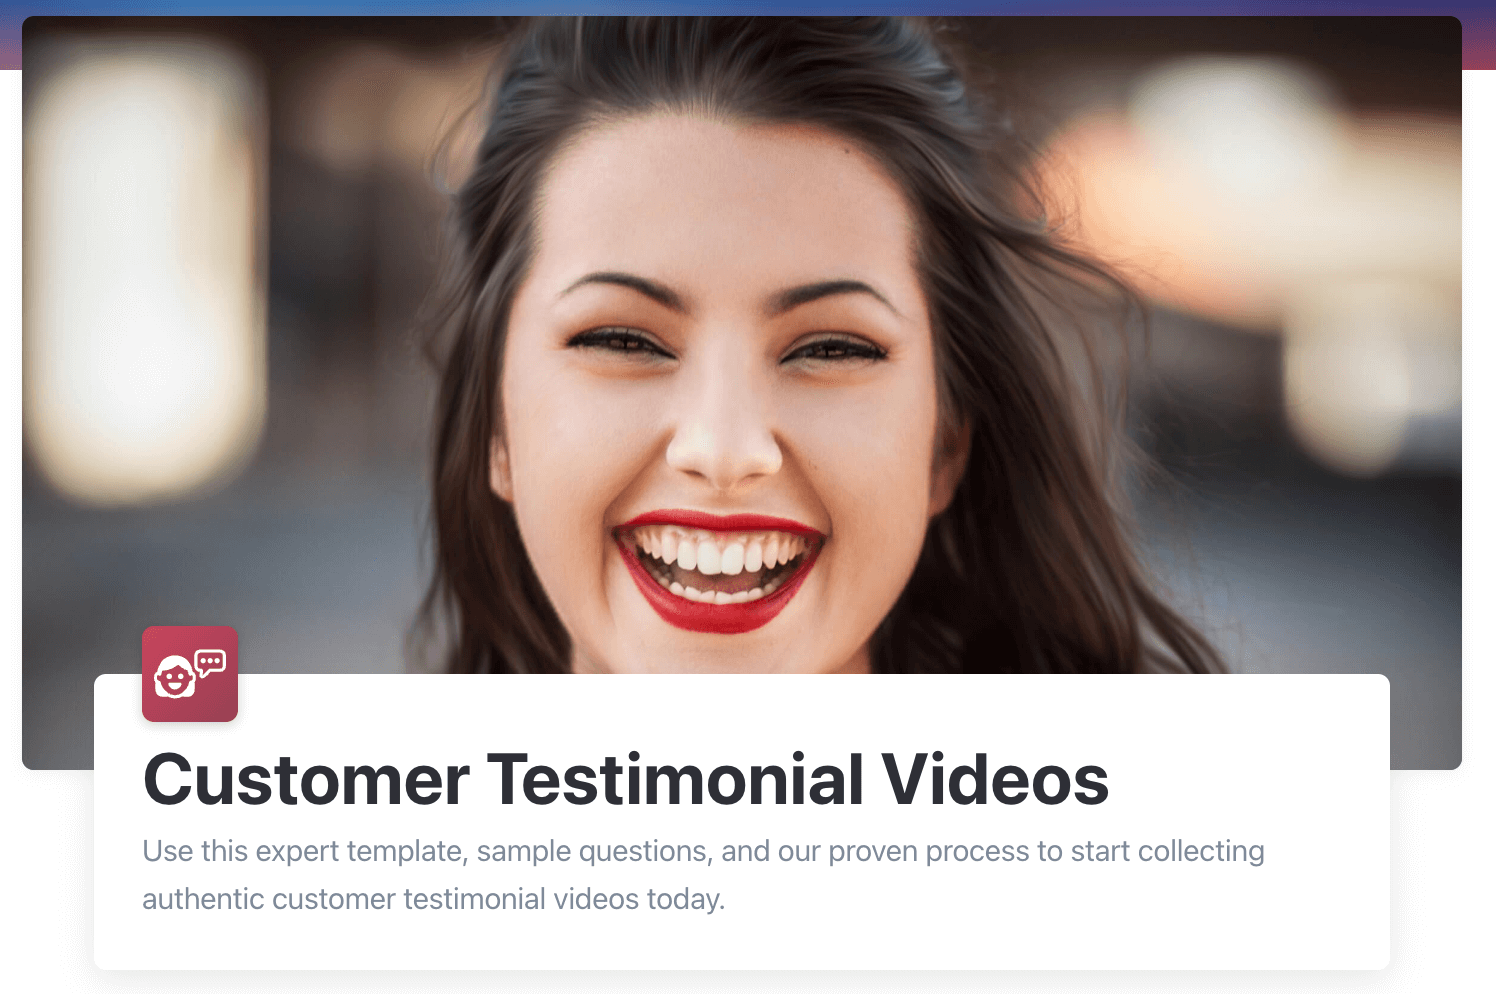 Customer testimonial videos. 